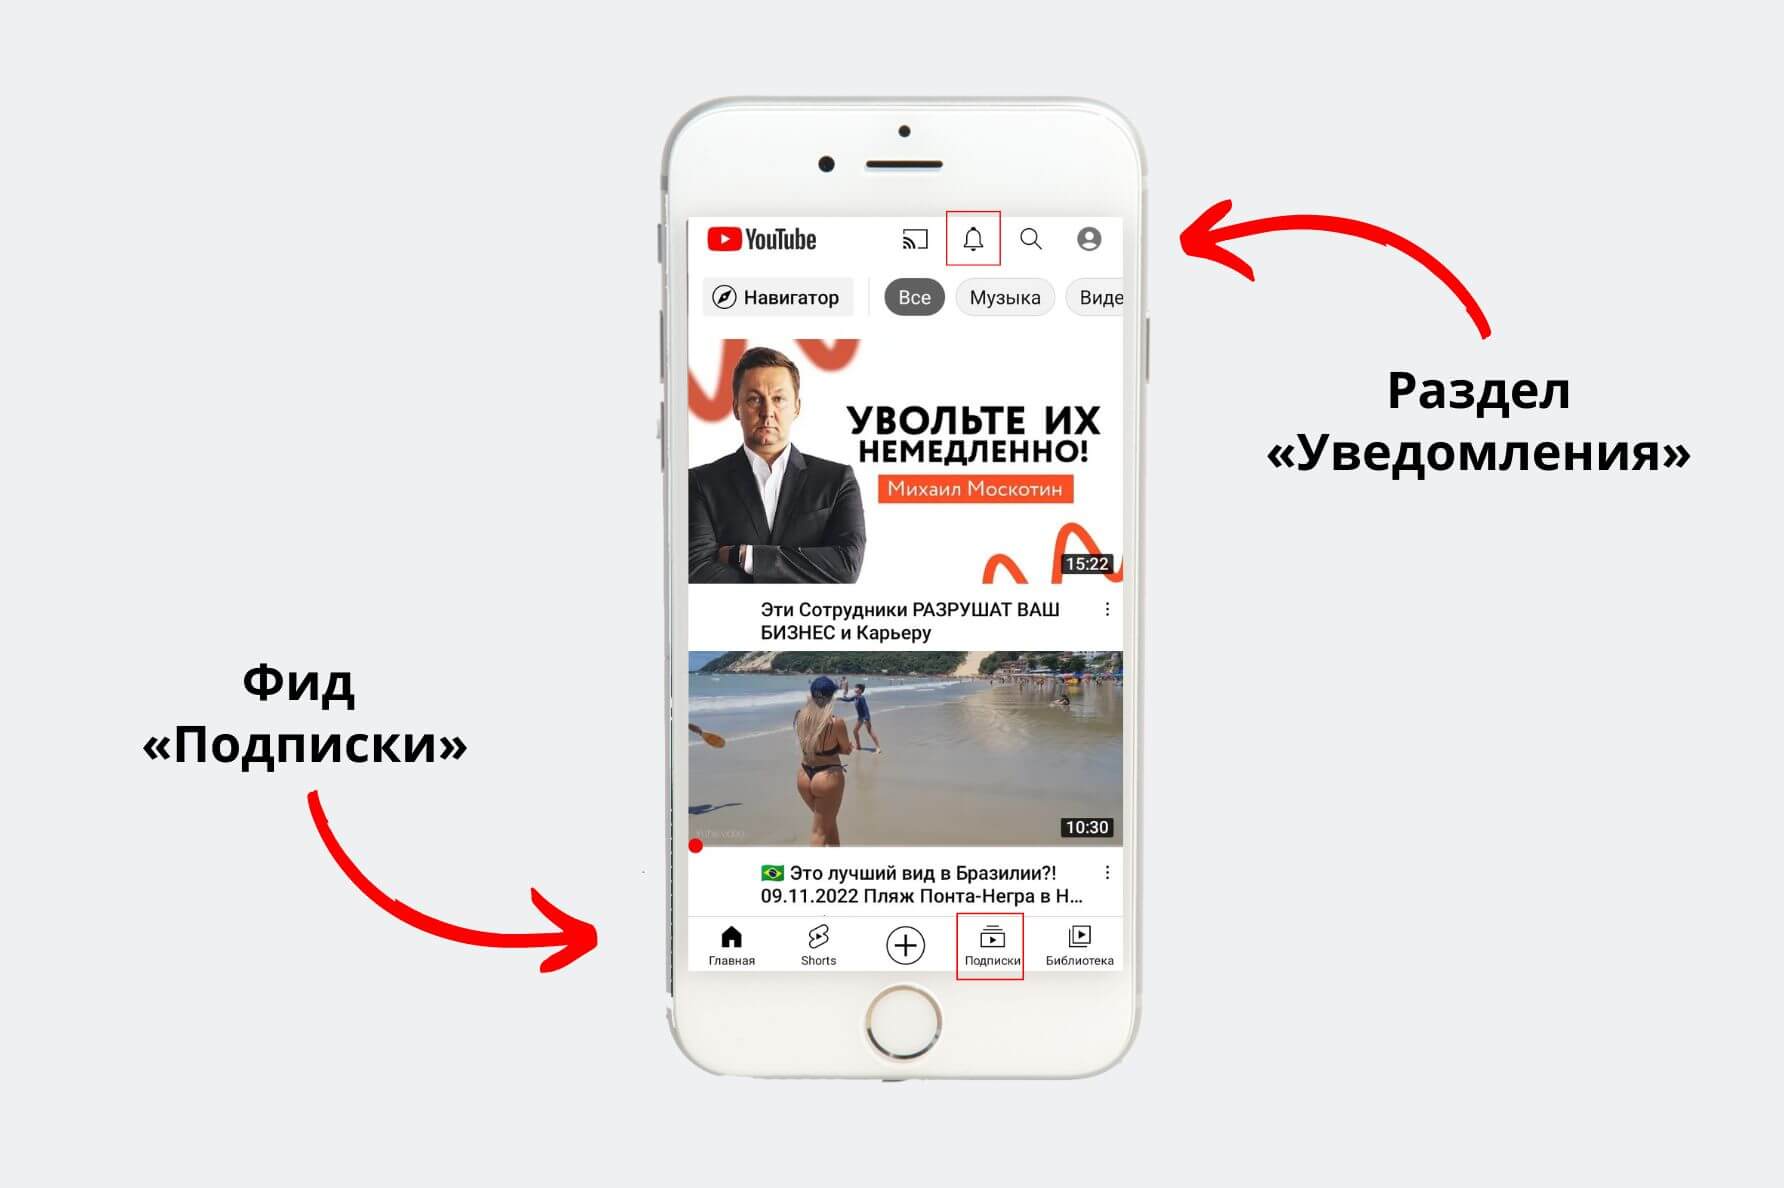 Пиар групп Вконтакте, Пиар в YouTube, Инстаграм, Twitter, Агентство SocPRka